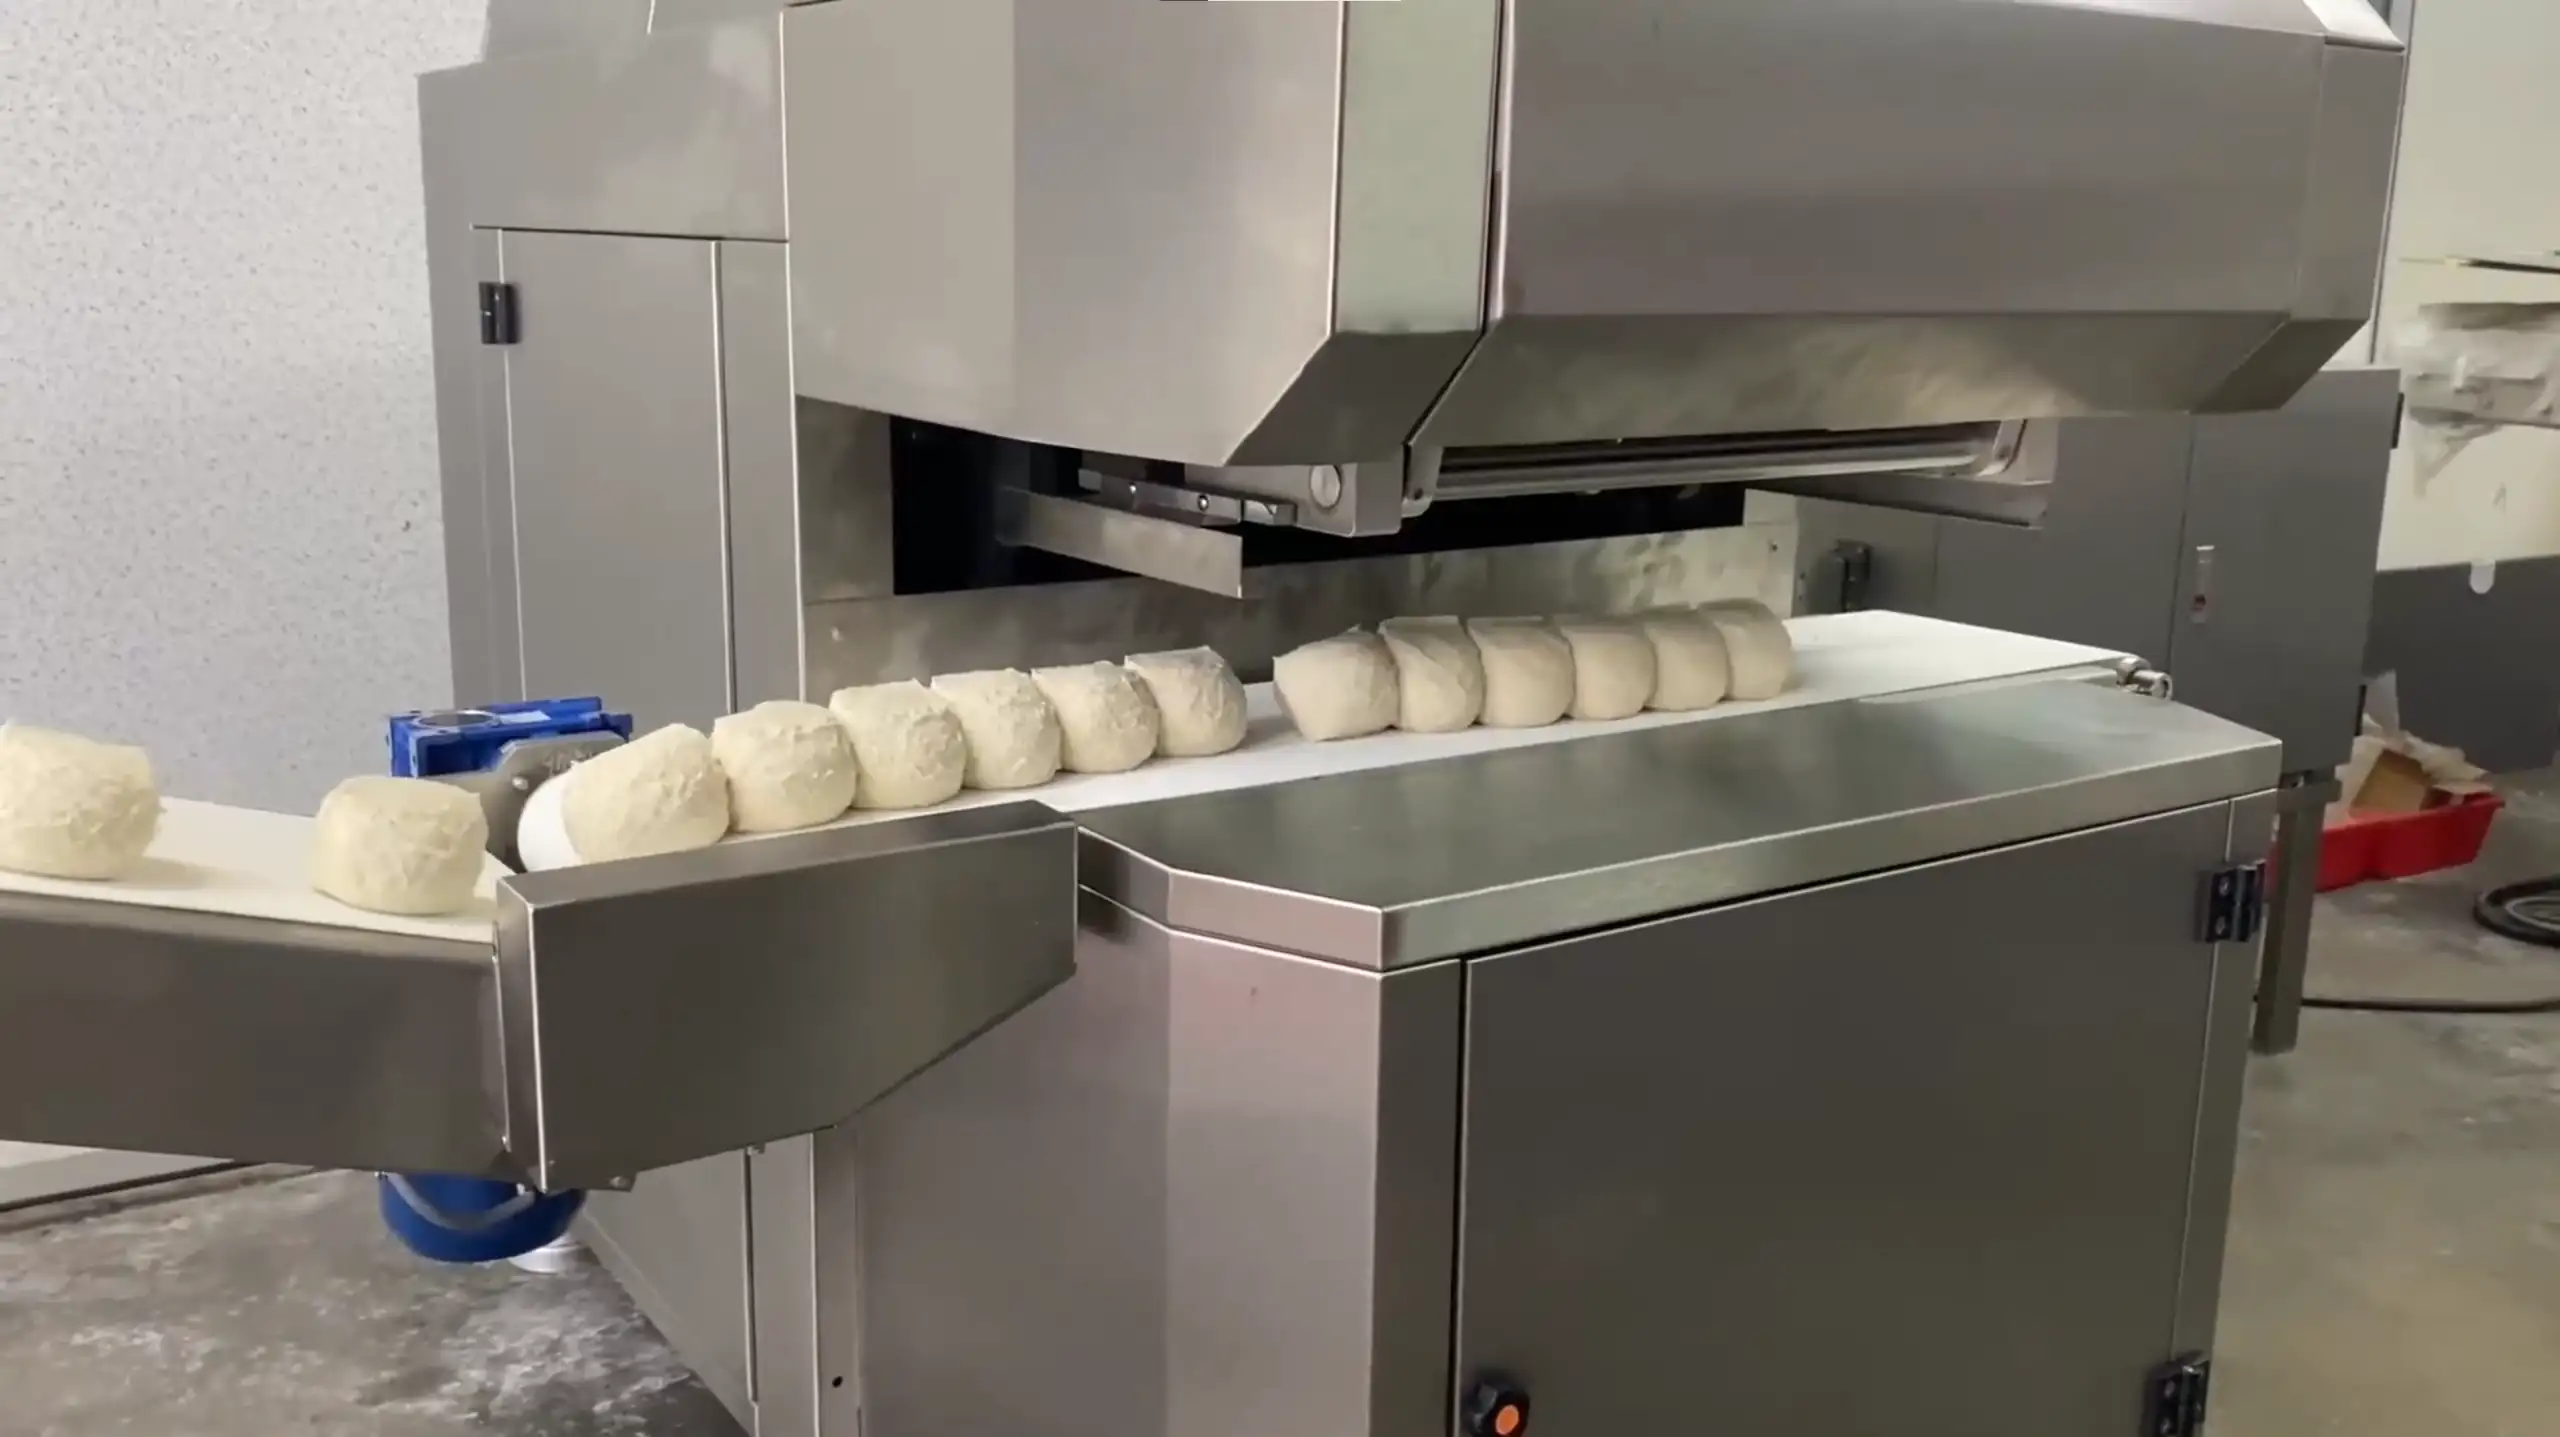 Automatic Dough Divider Machine